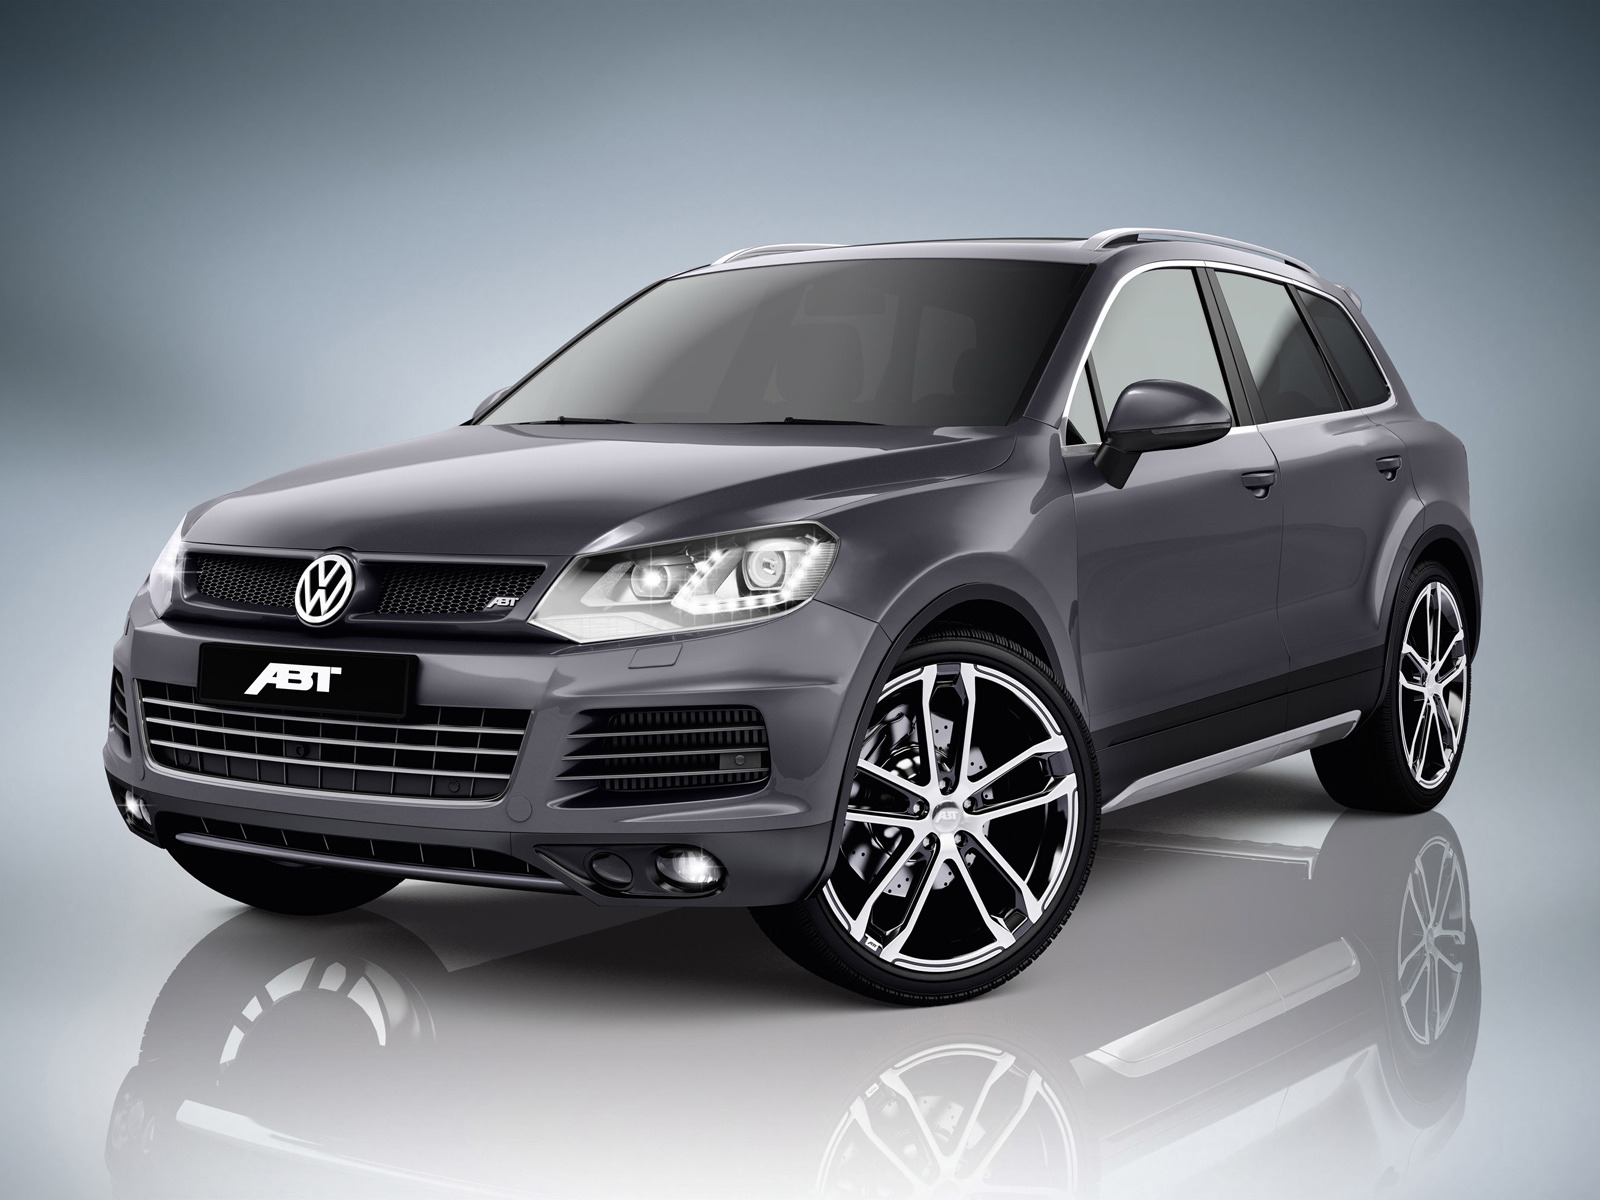 2011 ABT VW Touareg for 1600 x 1200 resolution